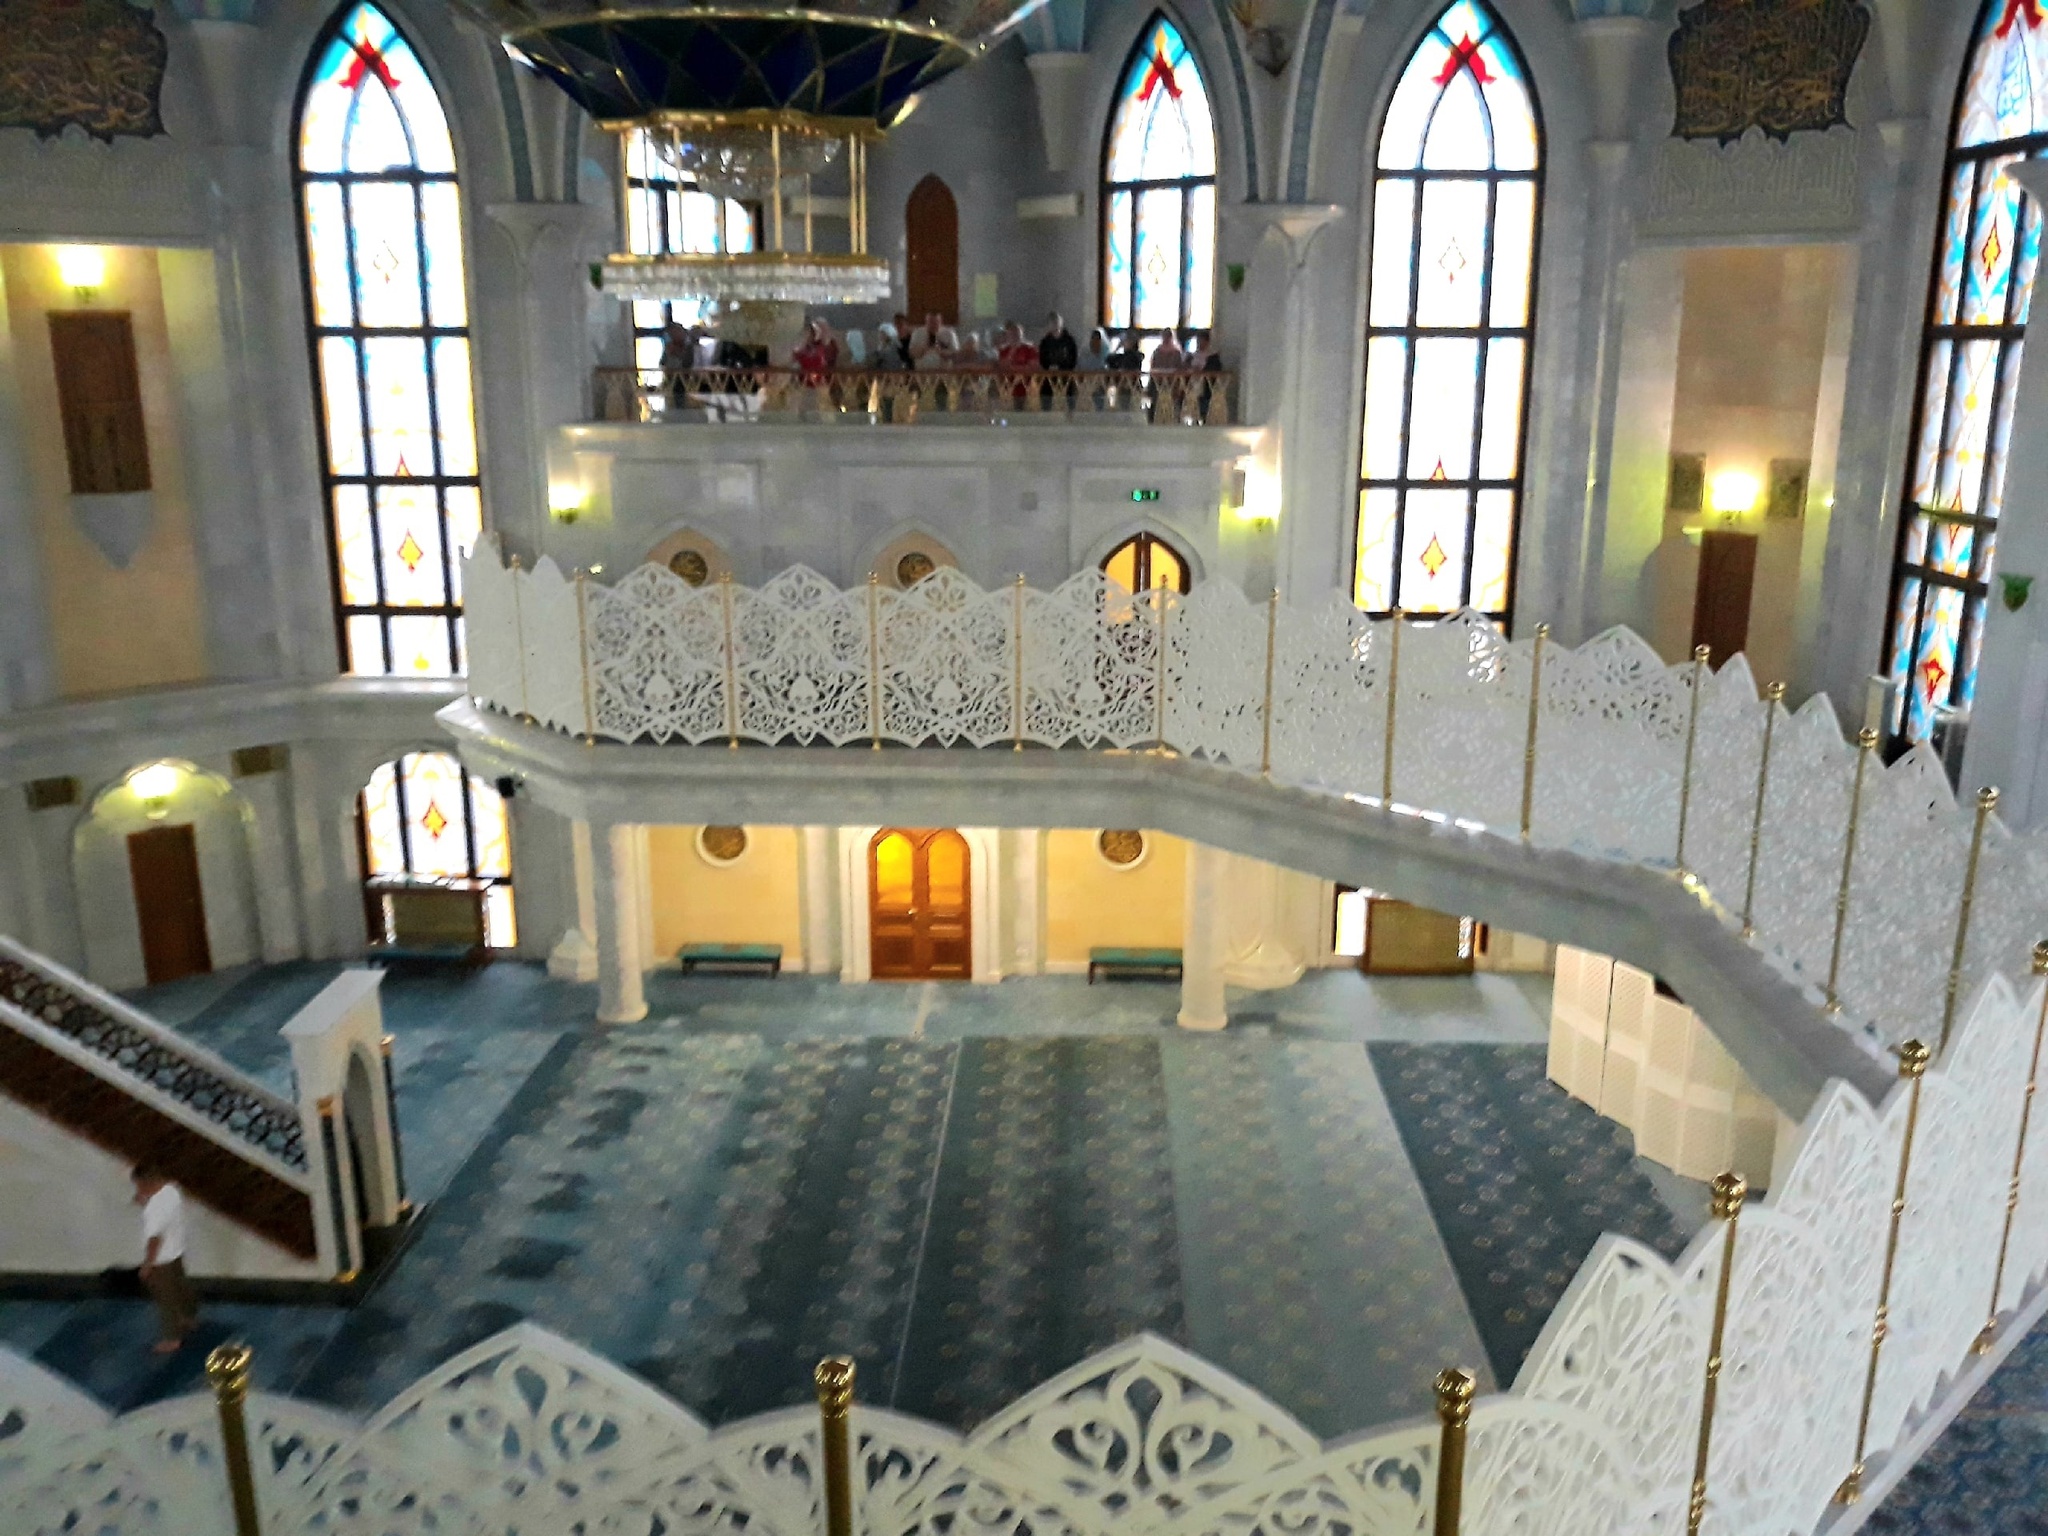 Голубая мечта о голубой мечети | Пикабу